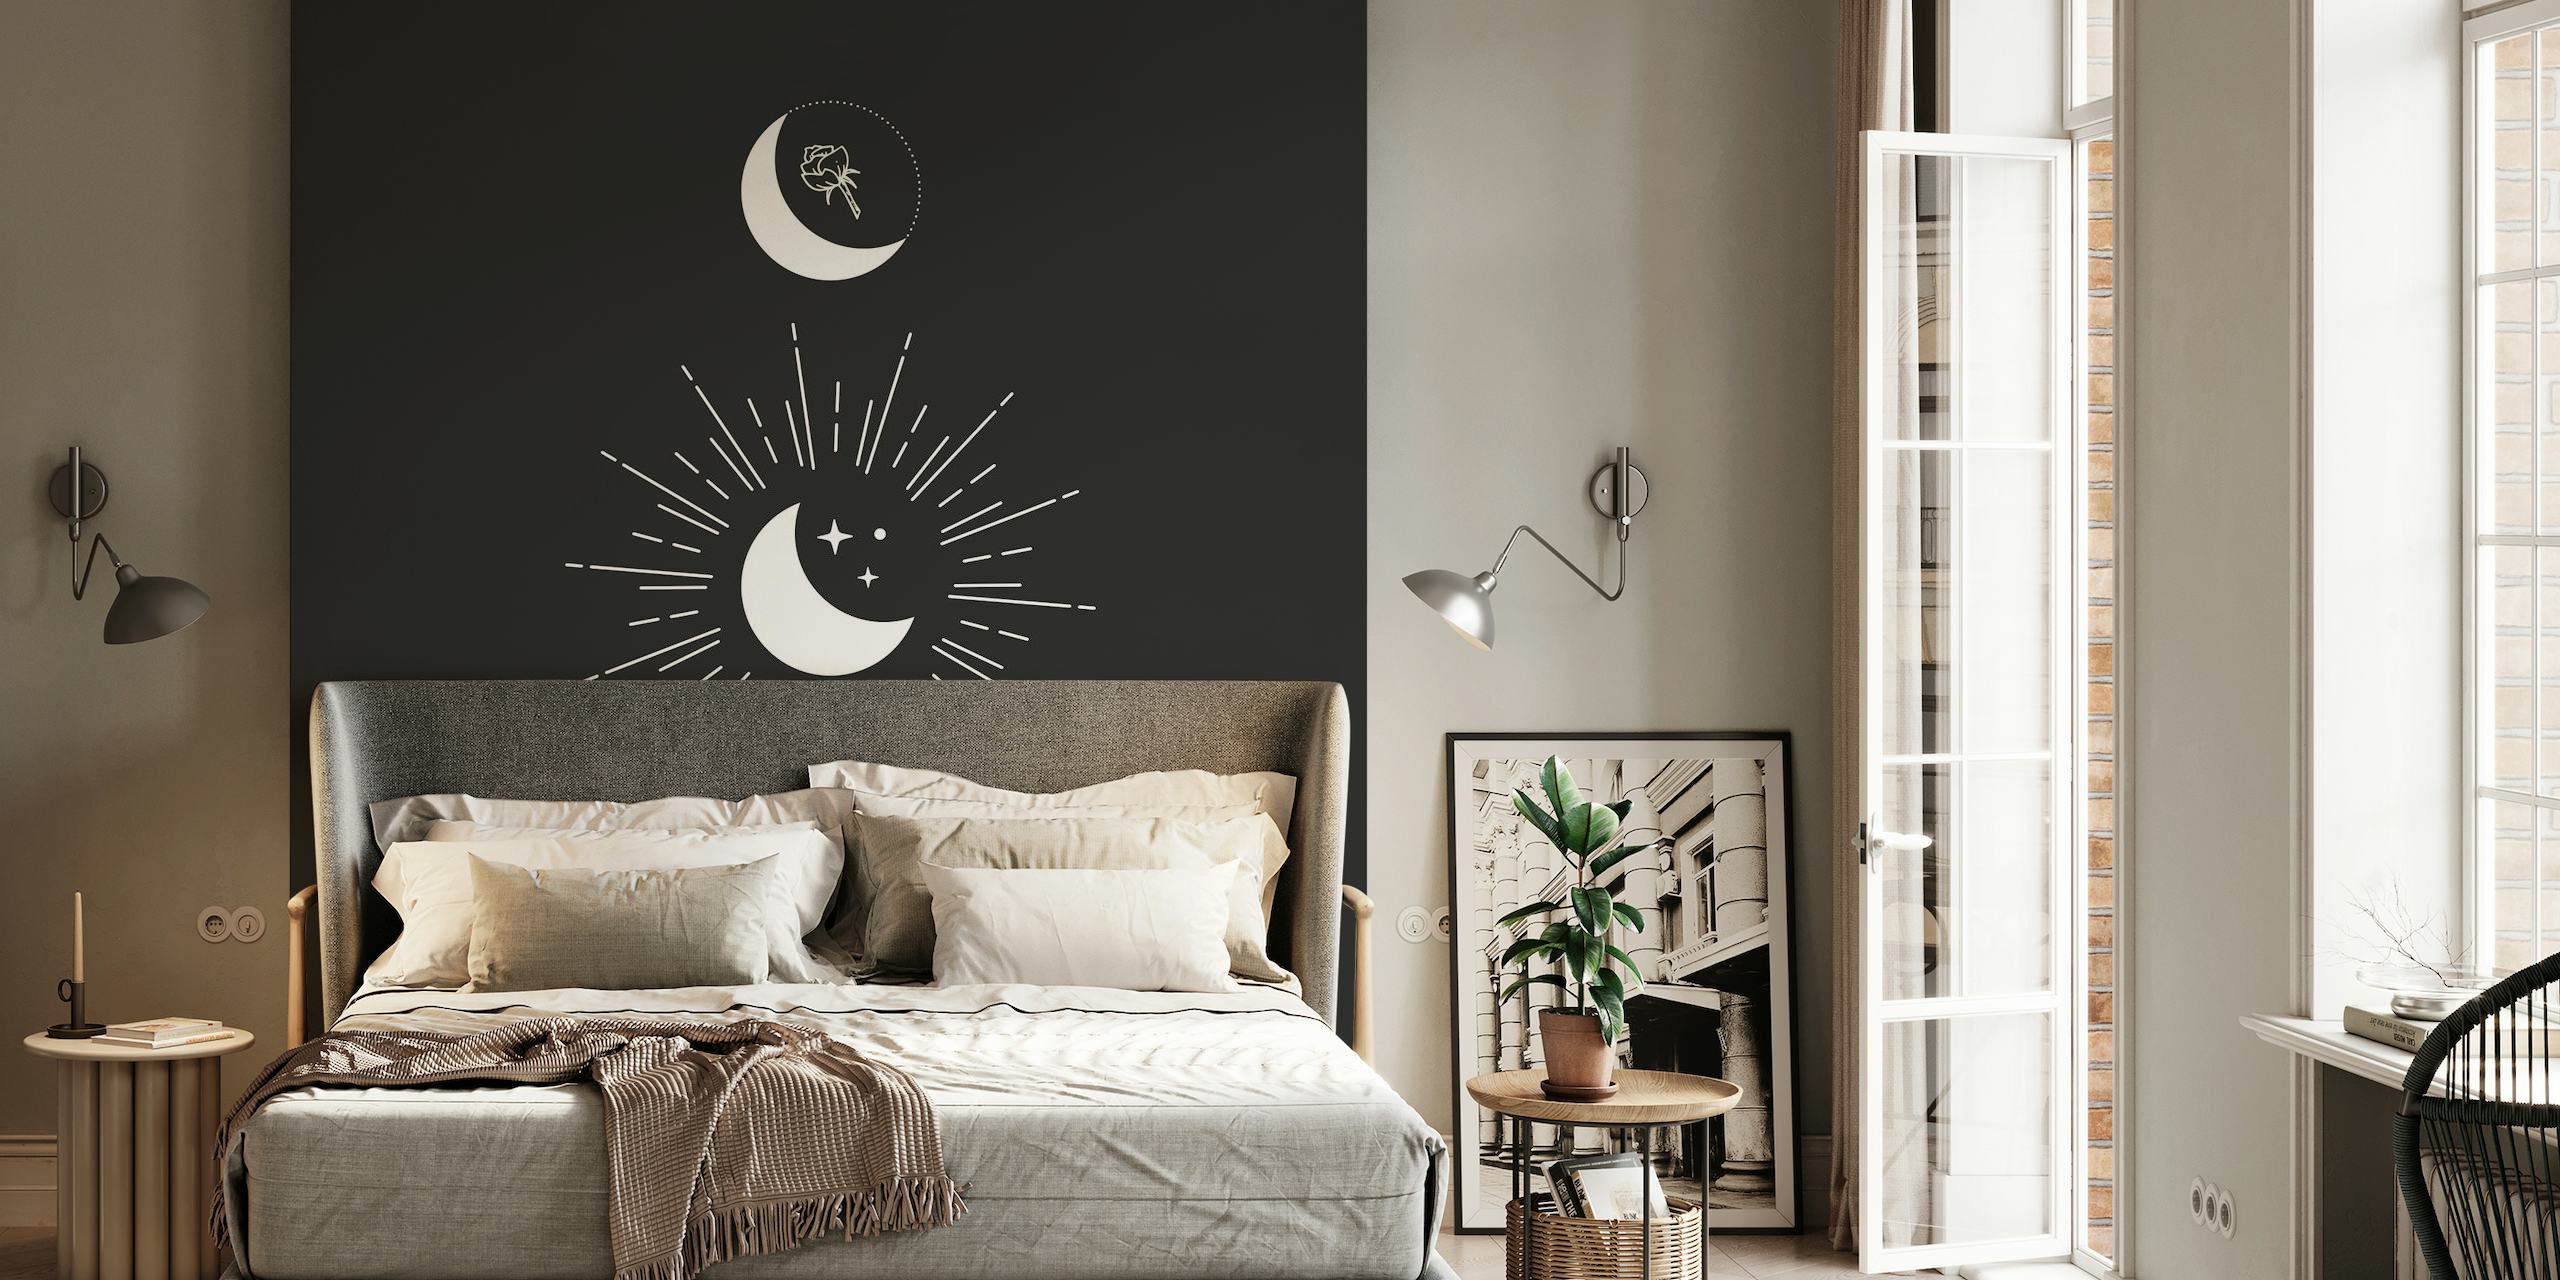 Black Moon Phases wallpaper